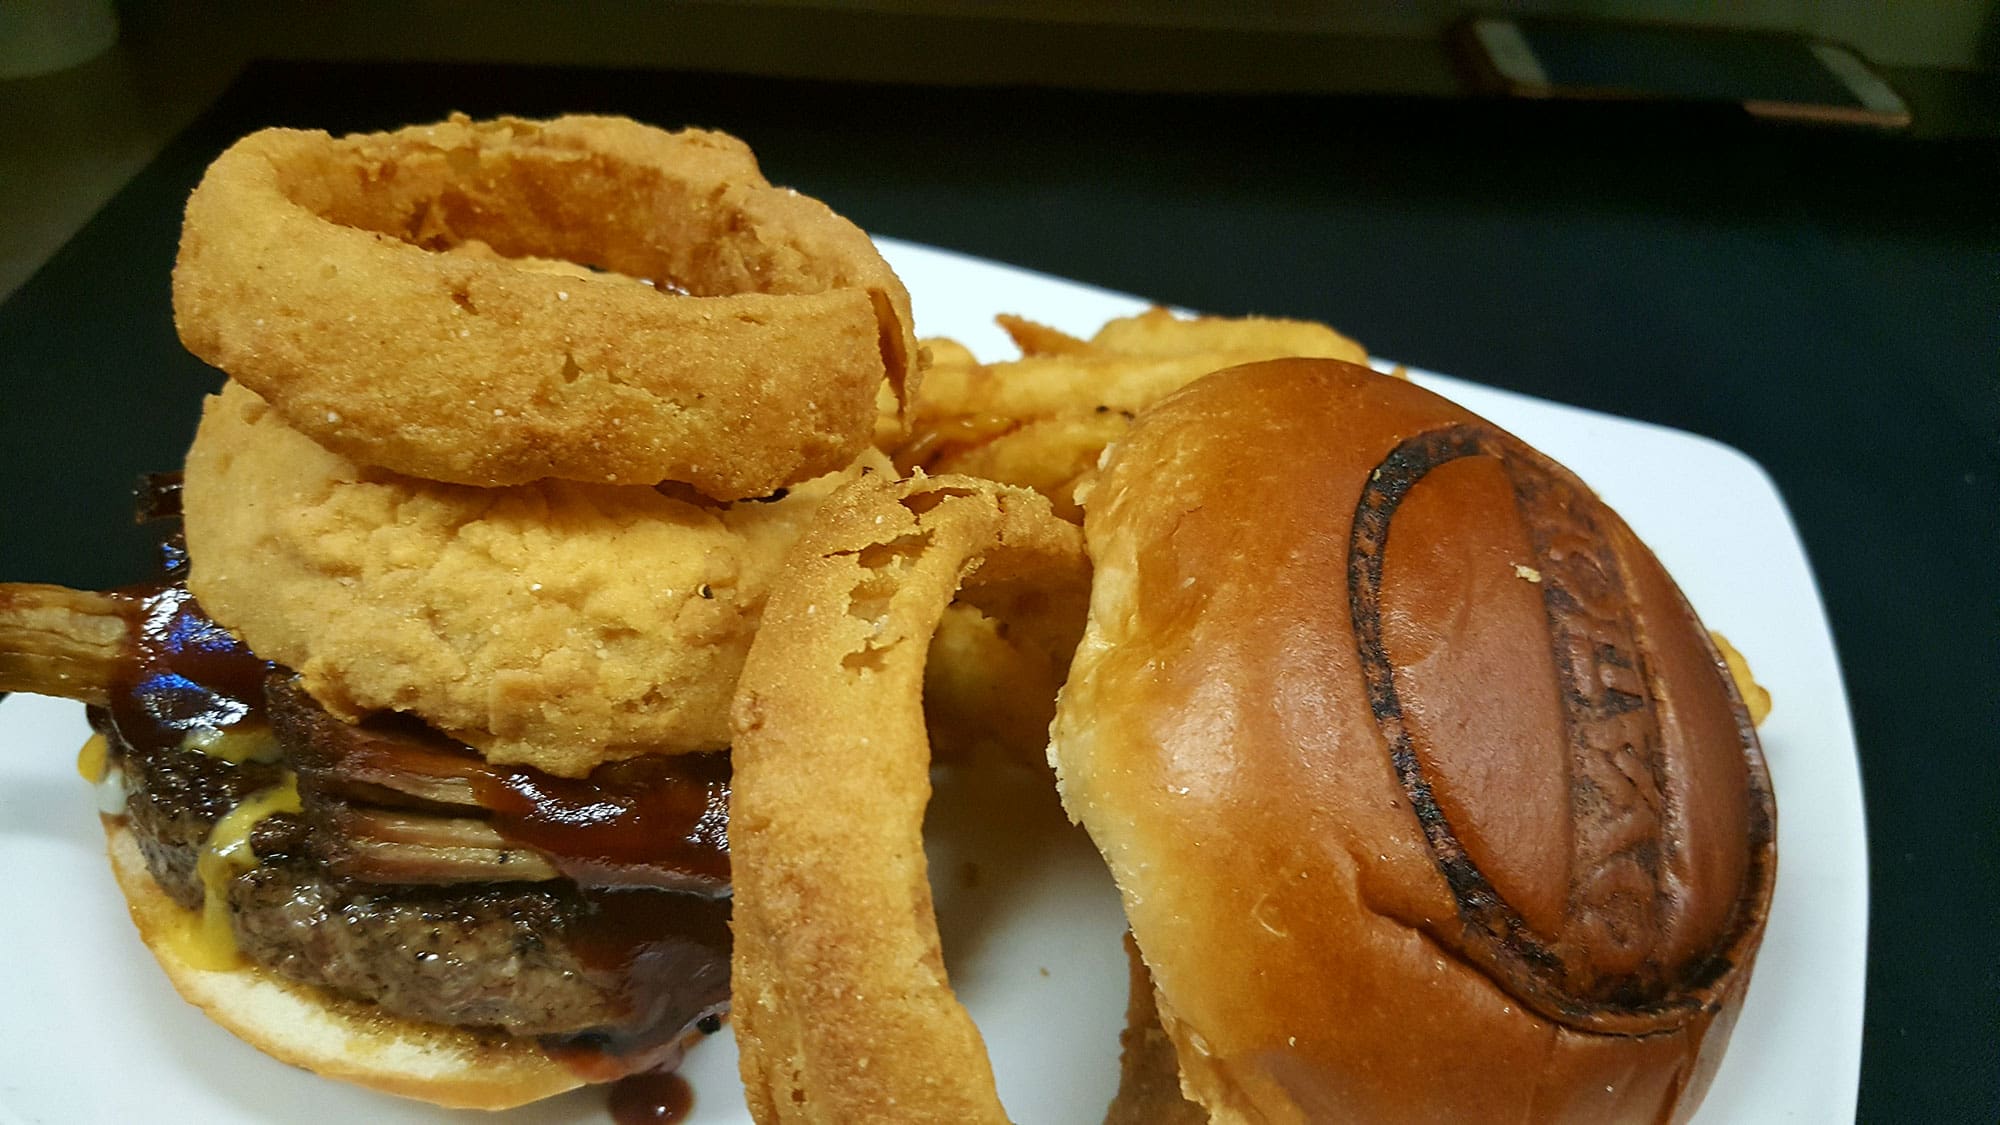 hamburger with beef, pork rib and onion rings at Ovations